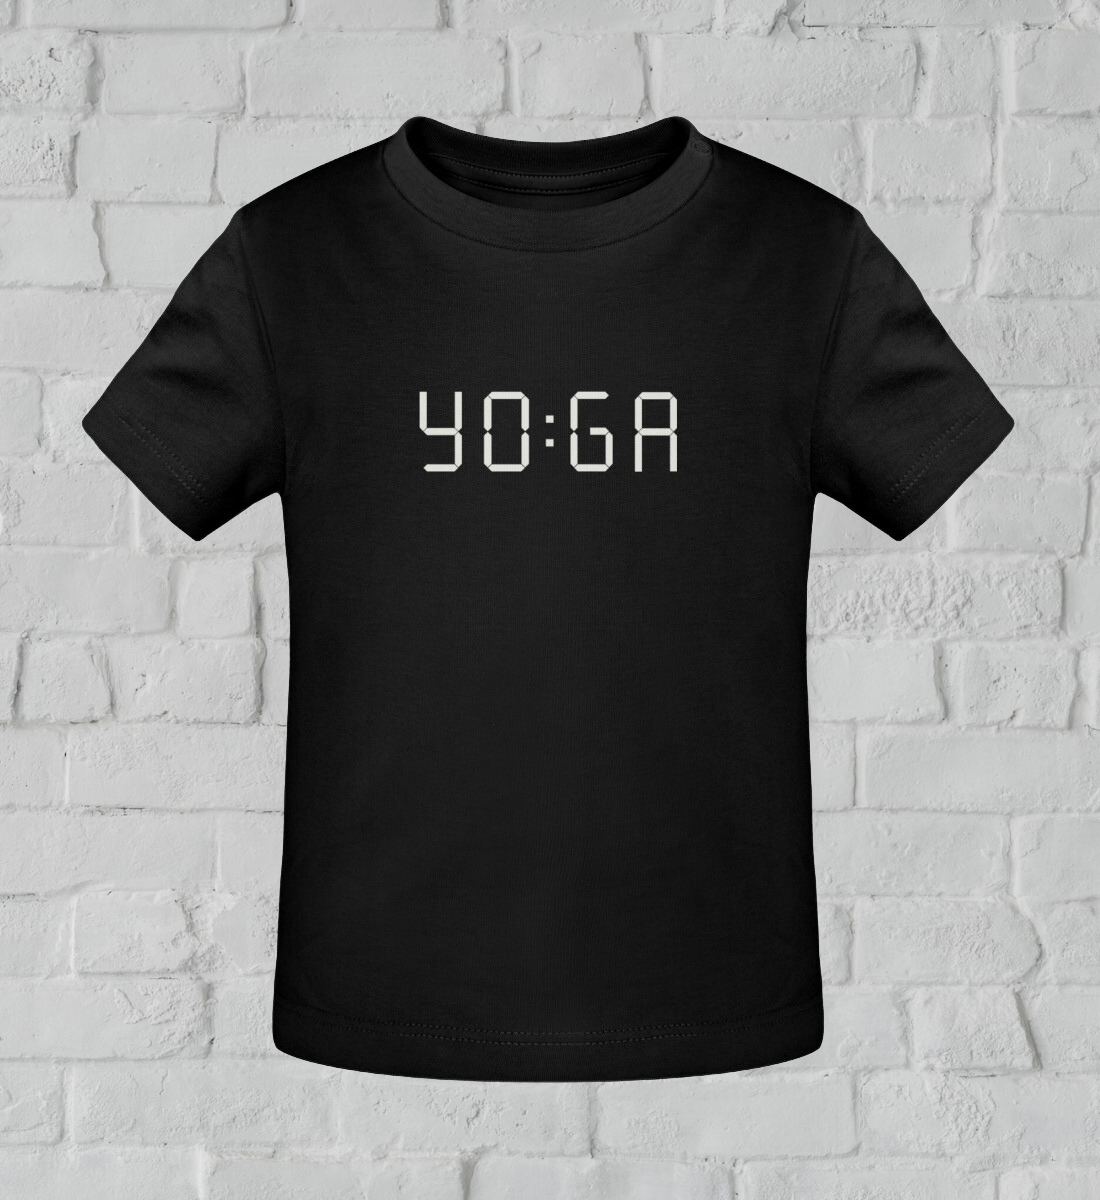 zeit für yoga l yoga shirt kinder schwarz l yoga kleidung kinder l nachhaltige mode für kinder l vegane kinder mode